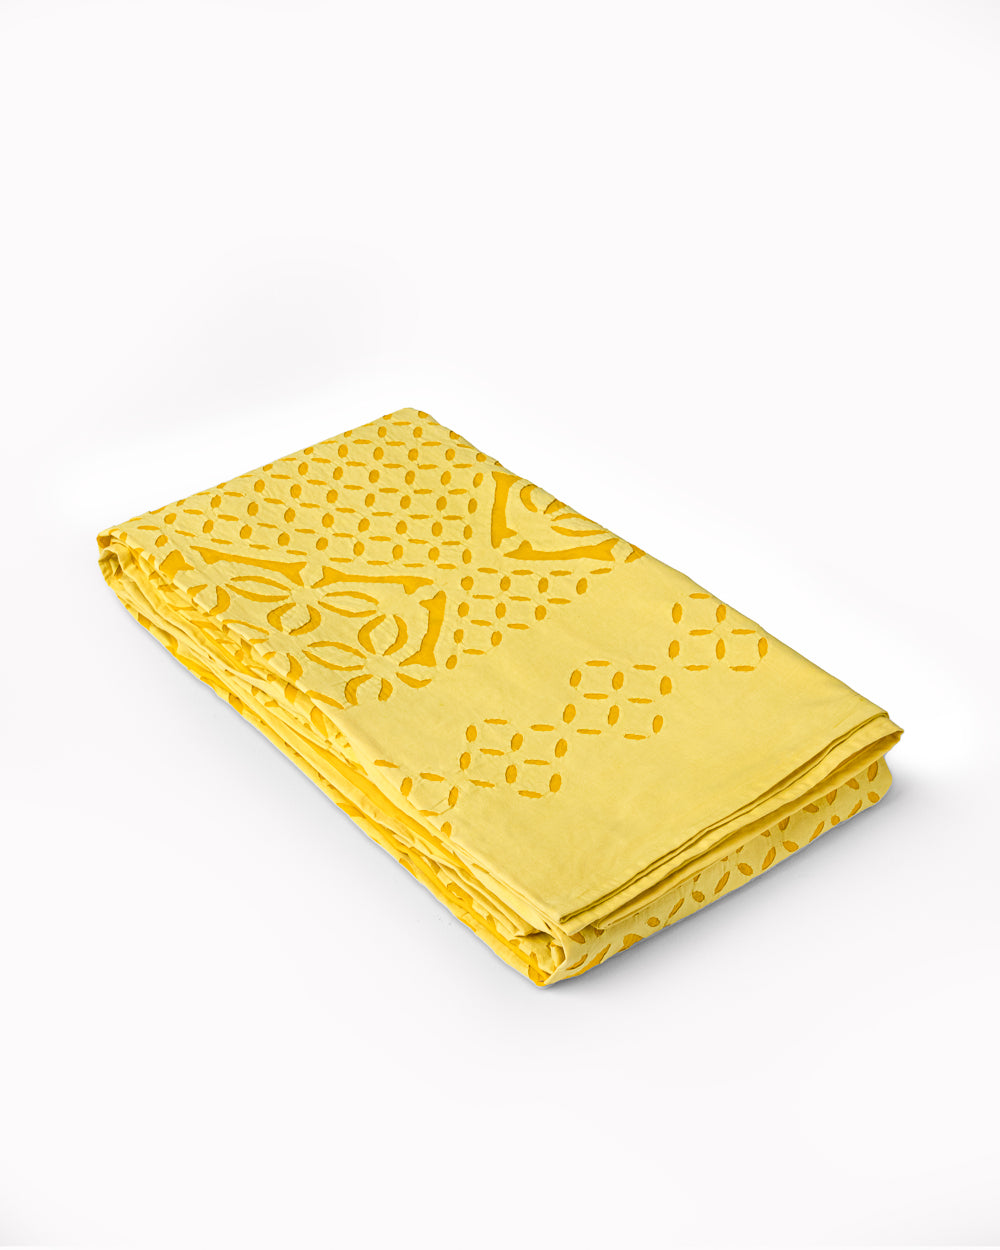 Bedcover Applique Mehndi Khuddi Design, Yellow